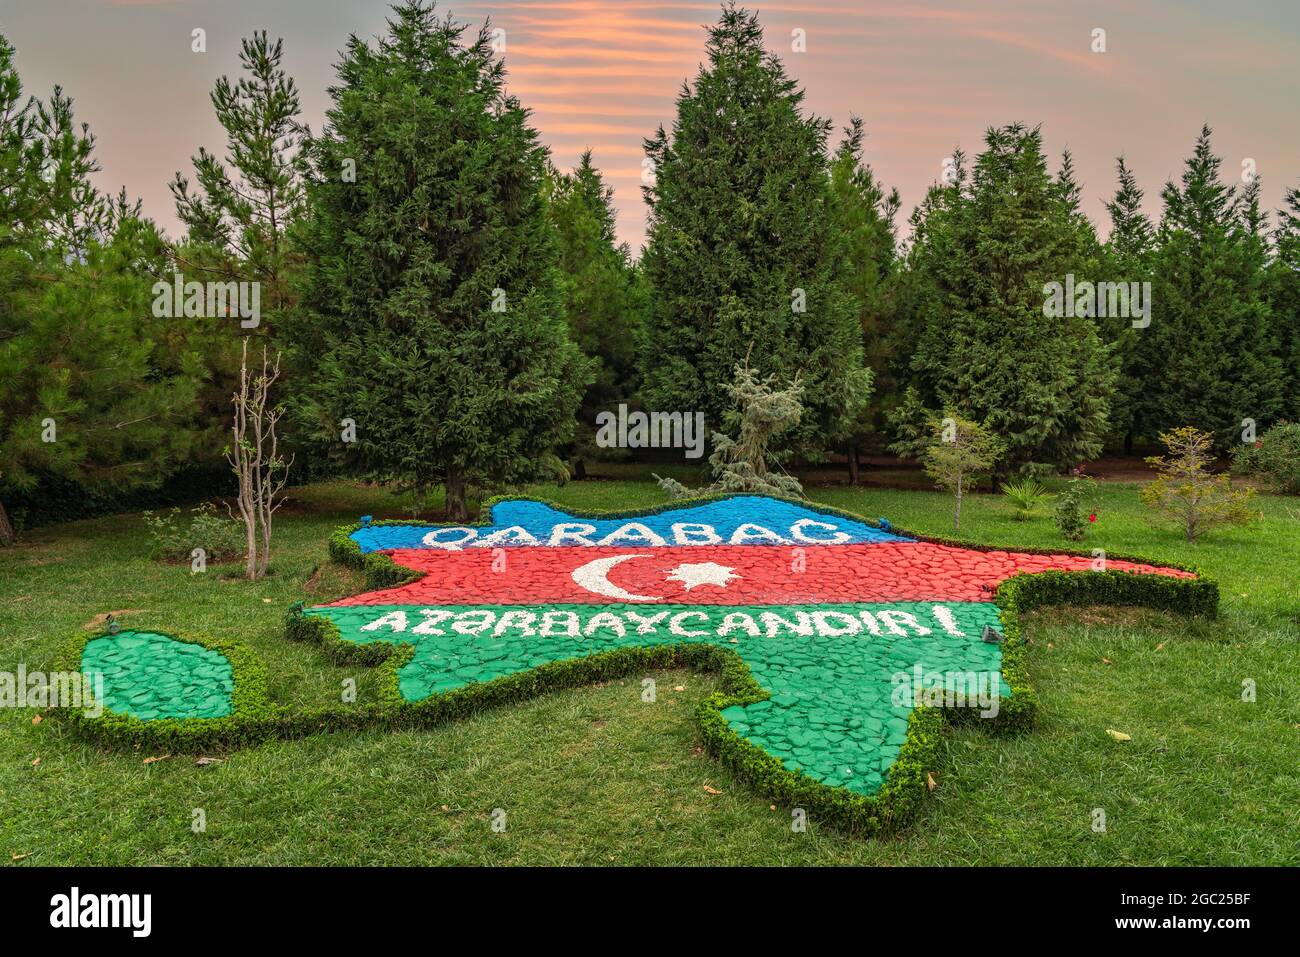 Map of Azerbaijan Republic in park Stock Photo